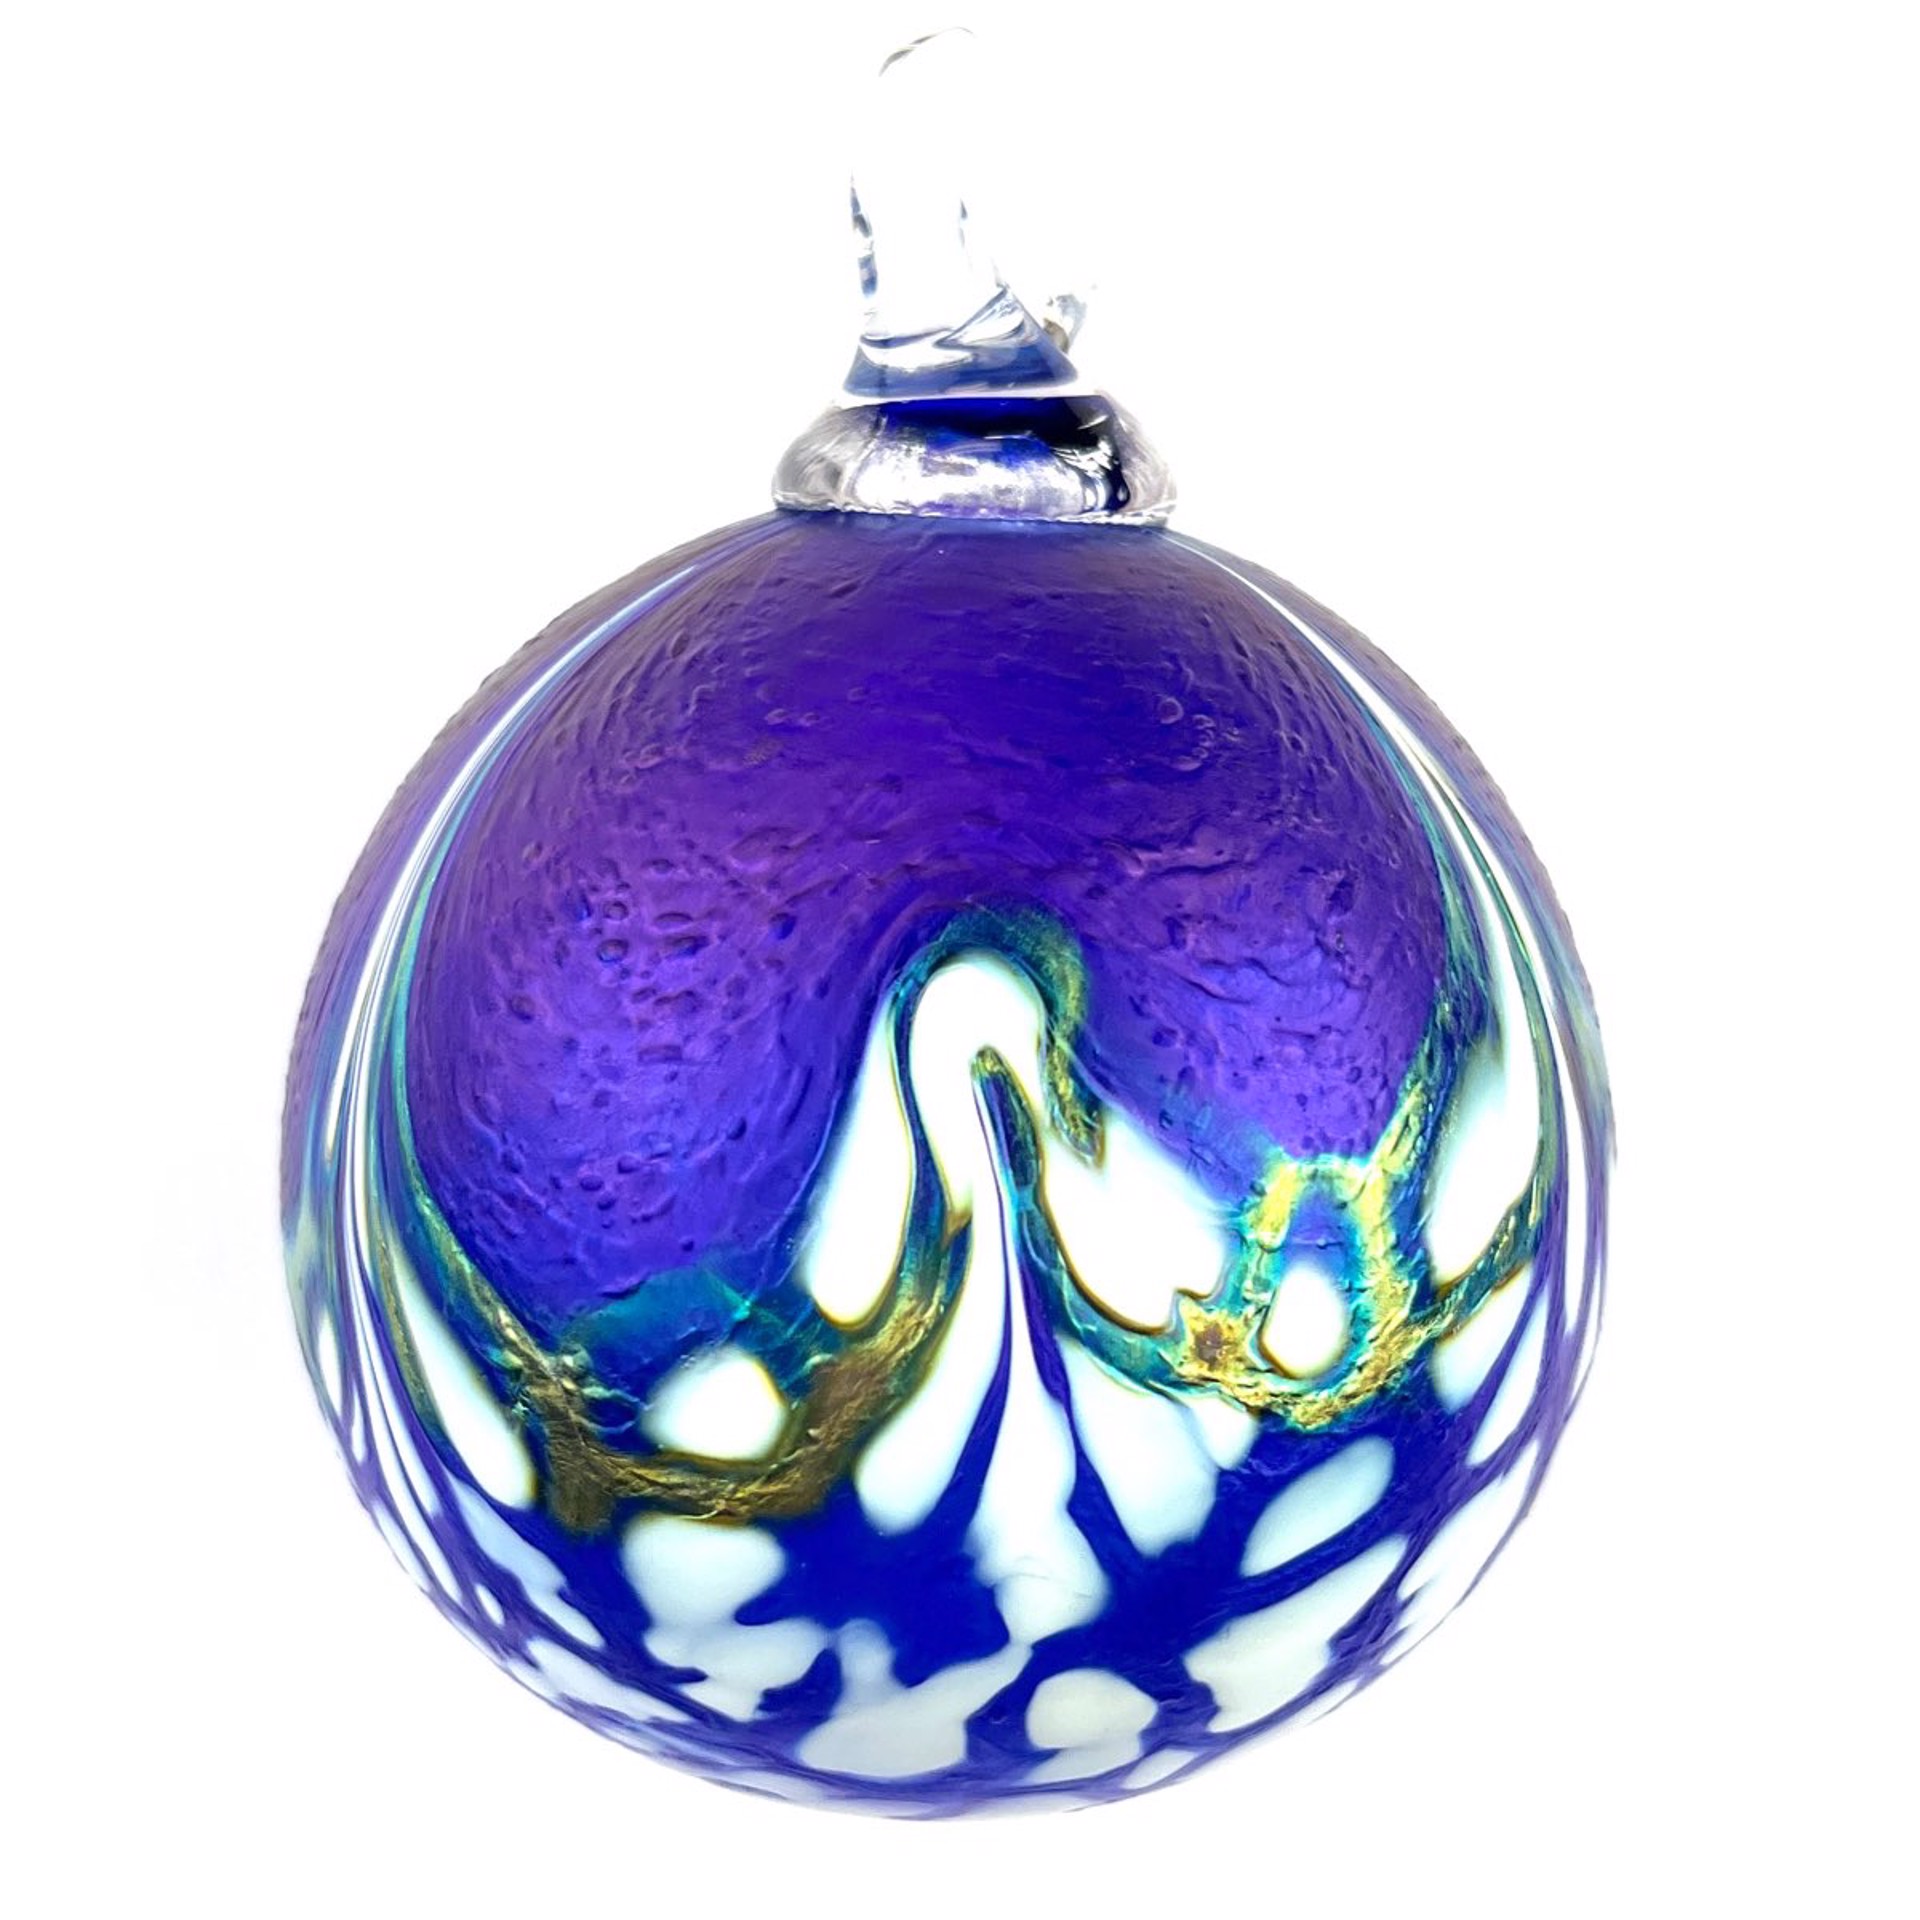 Artisan Northern Lights Ornament by Furnace Glass